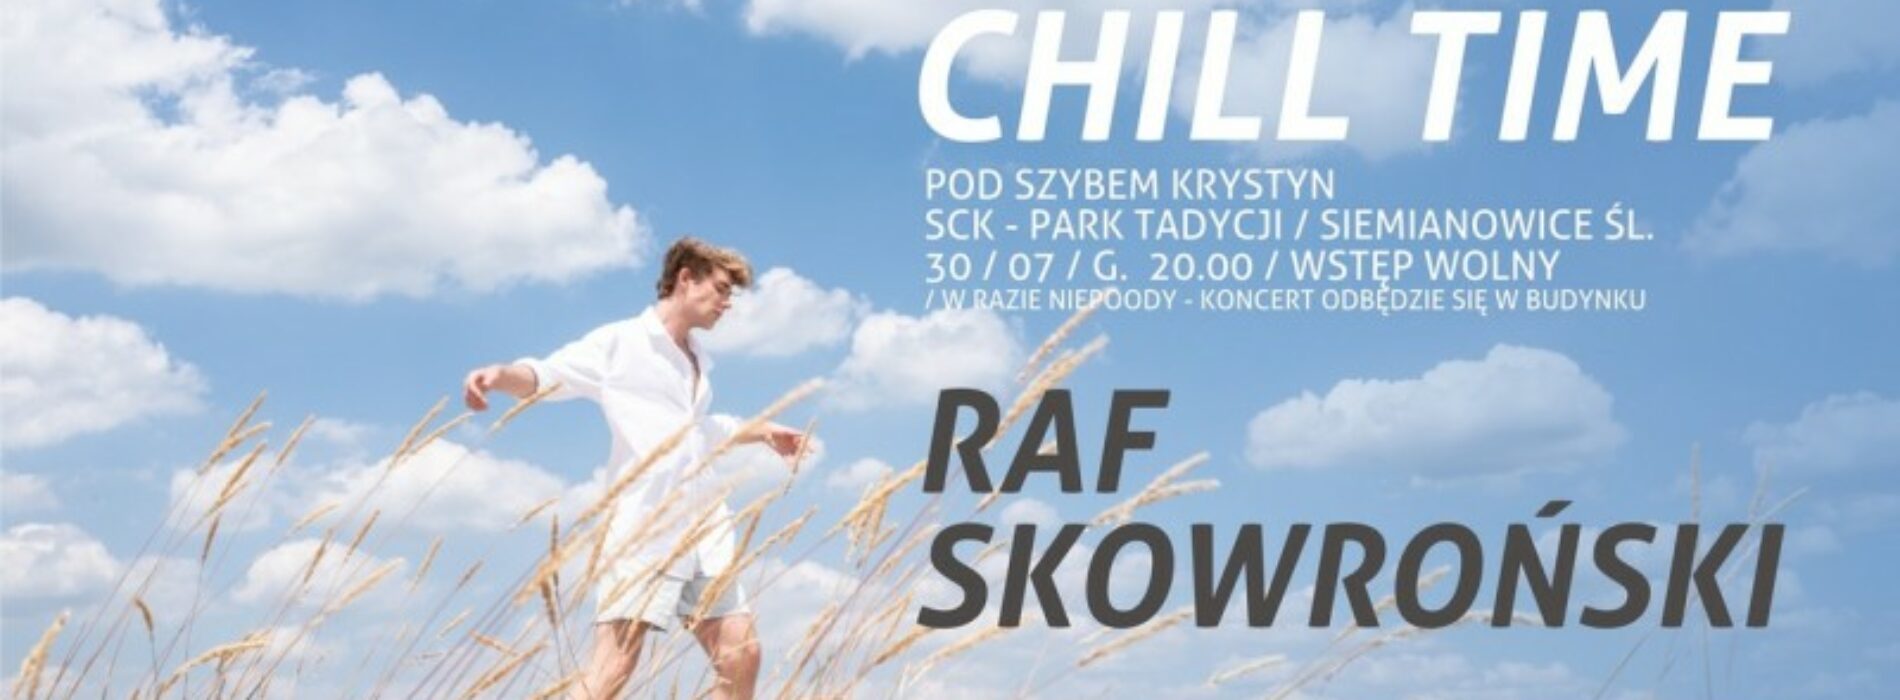 SCK Park Tradycji zaprasza na kolejny koncert Chill Time